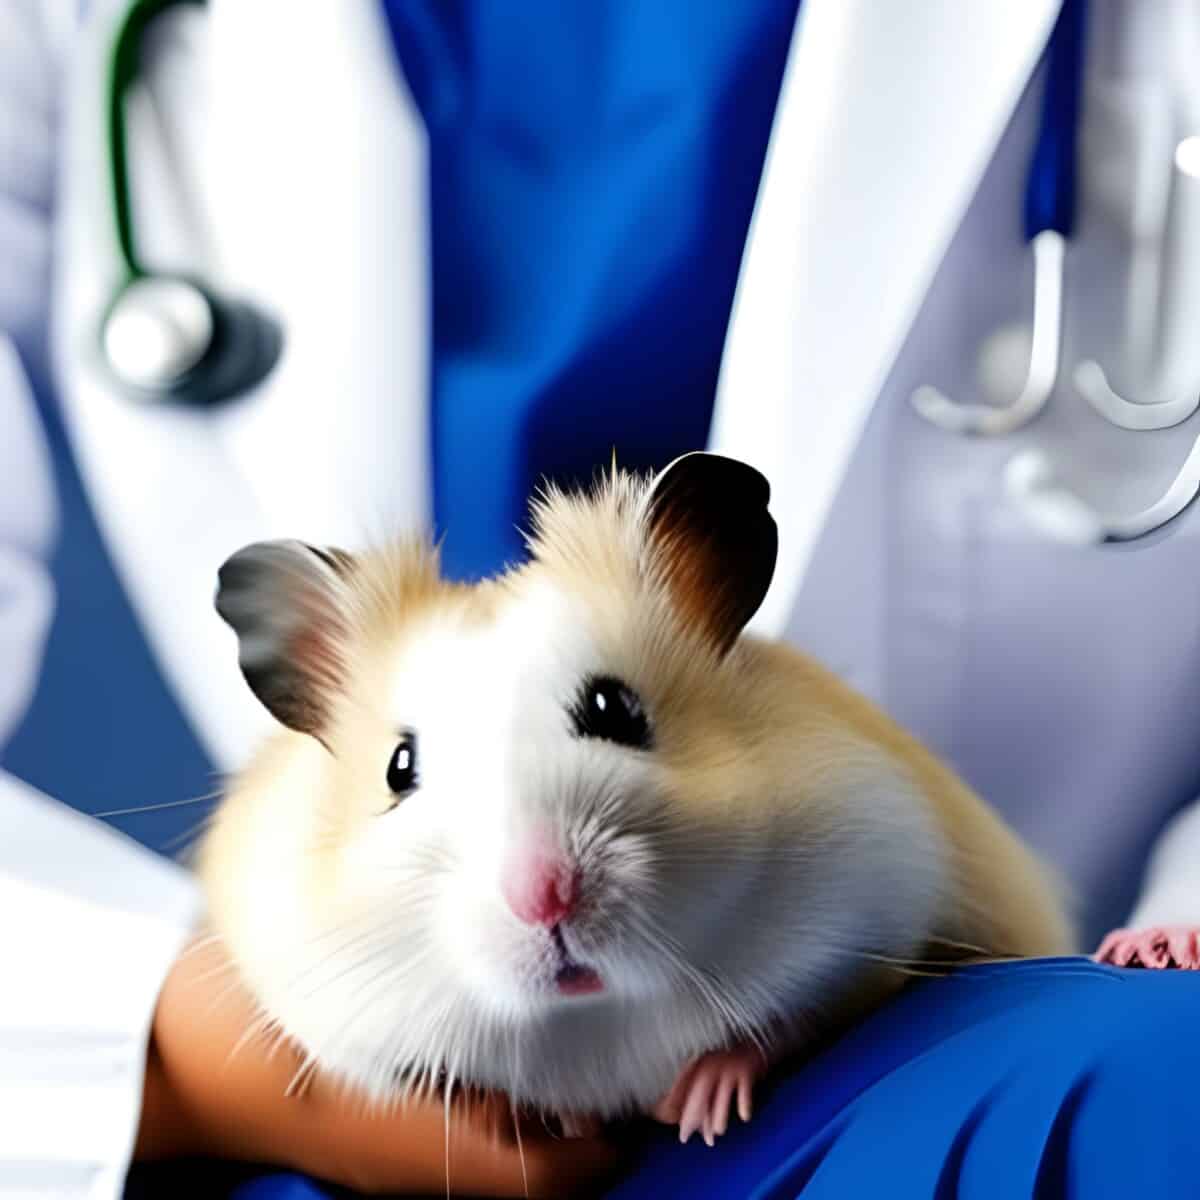 hamster health issues. hamster at the vet office.